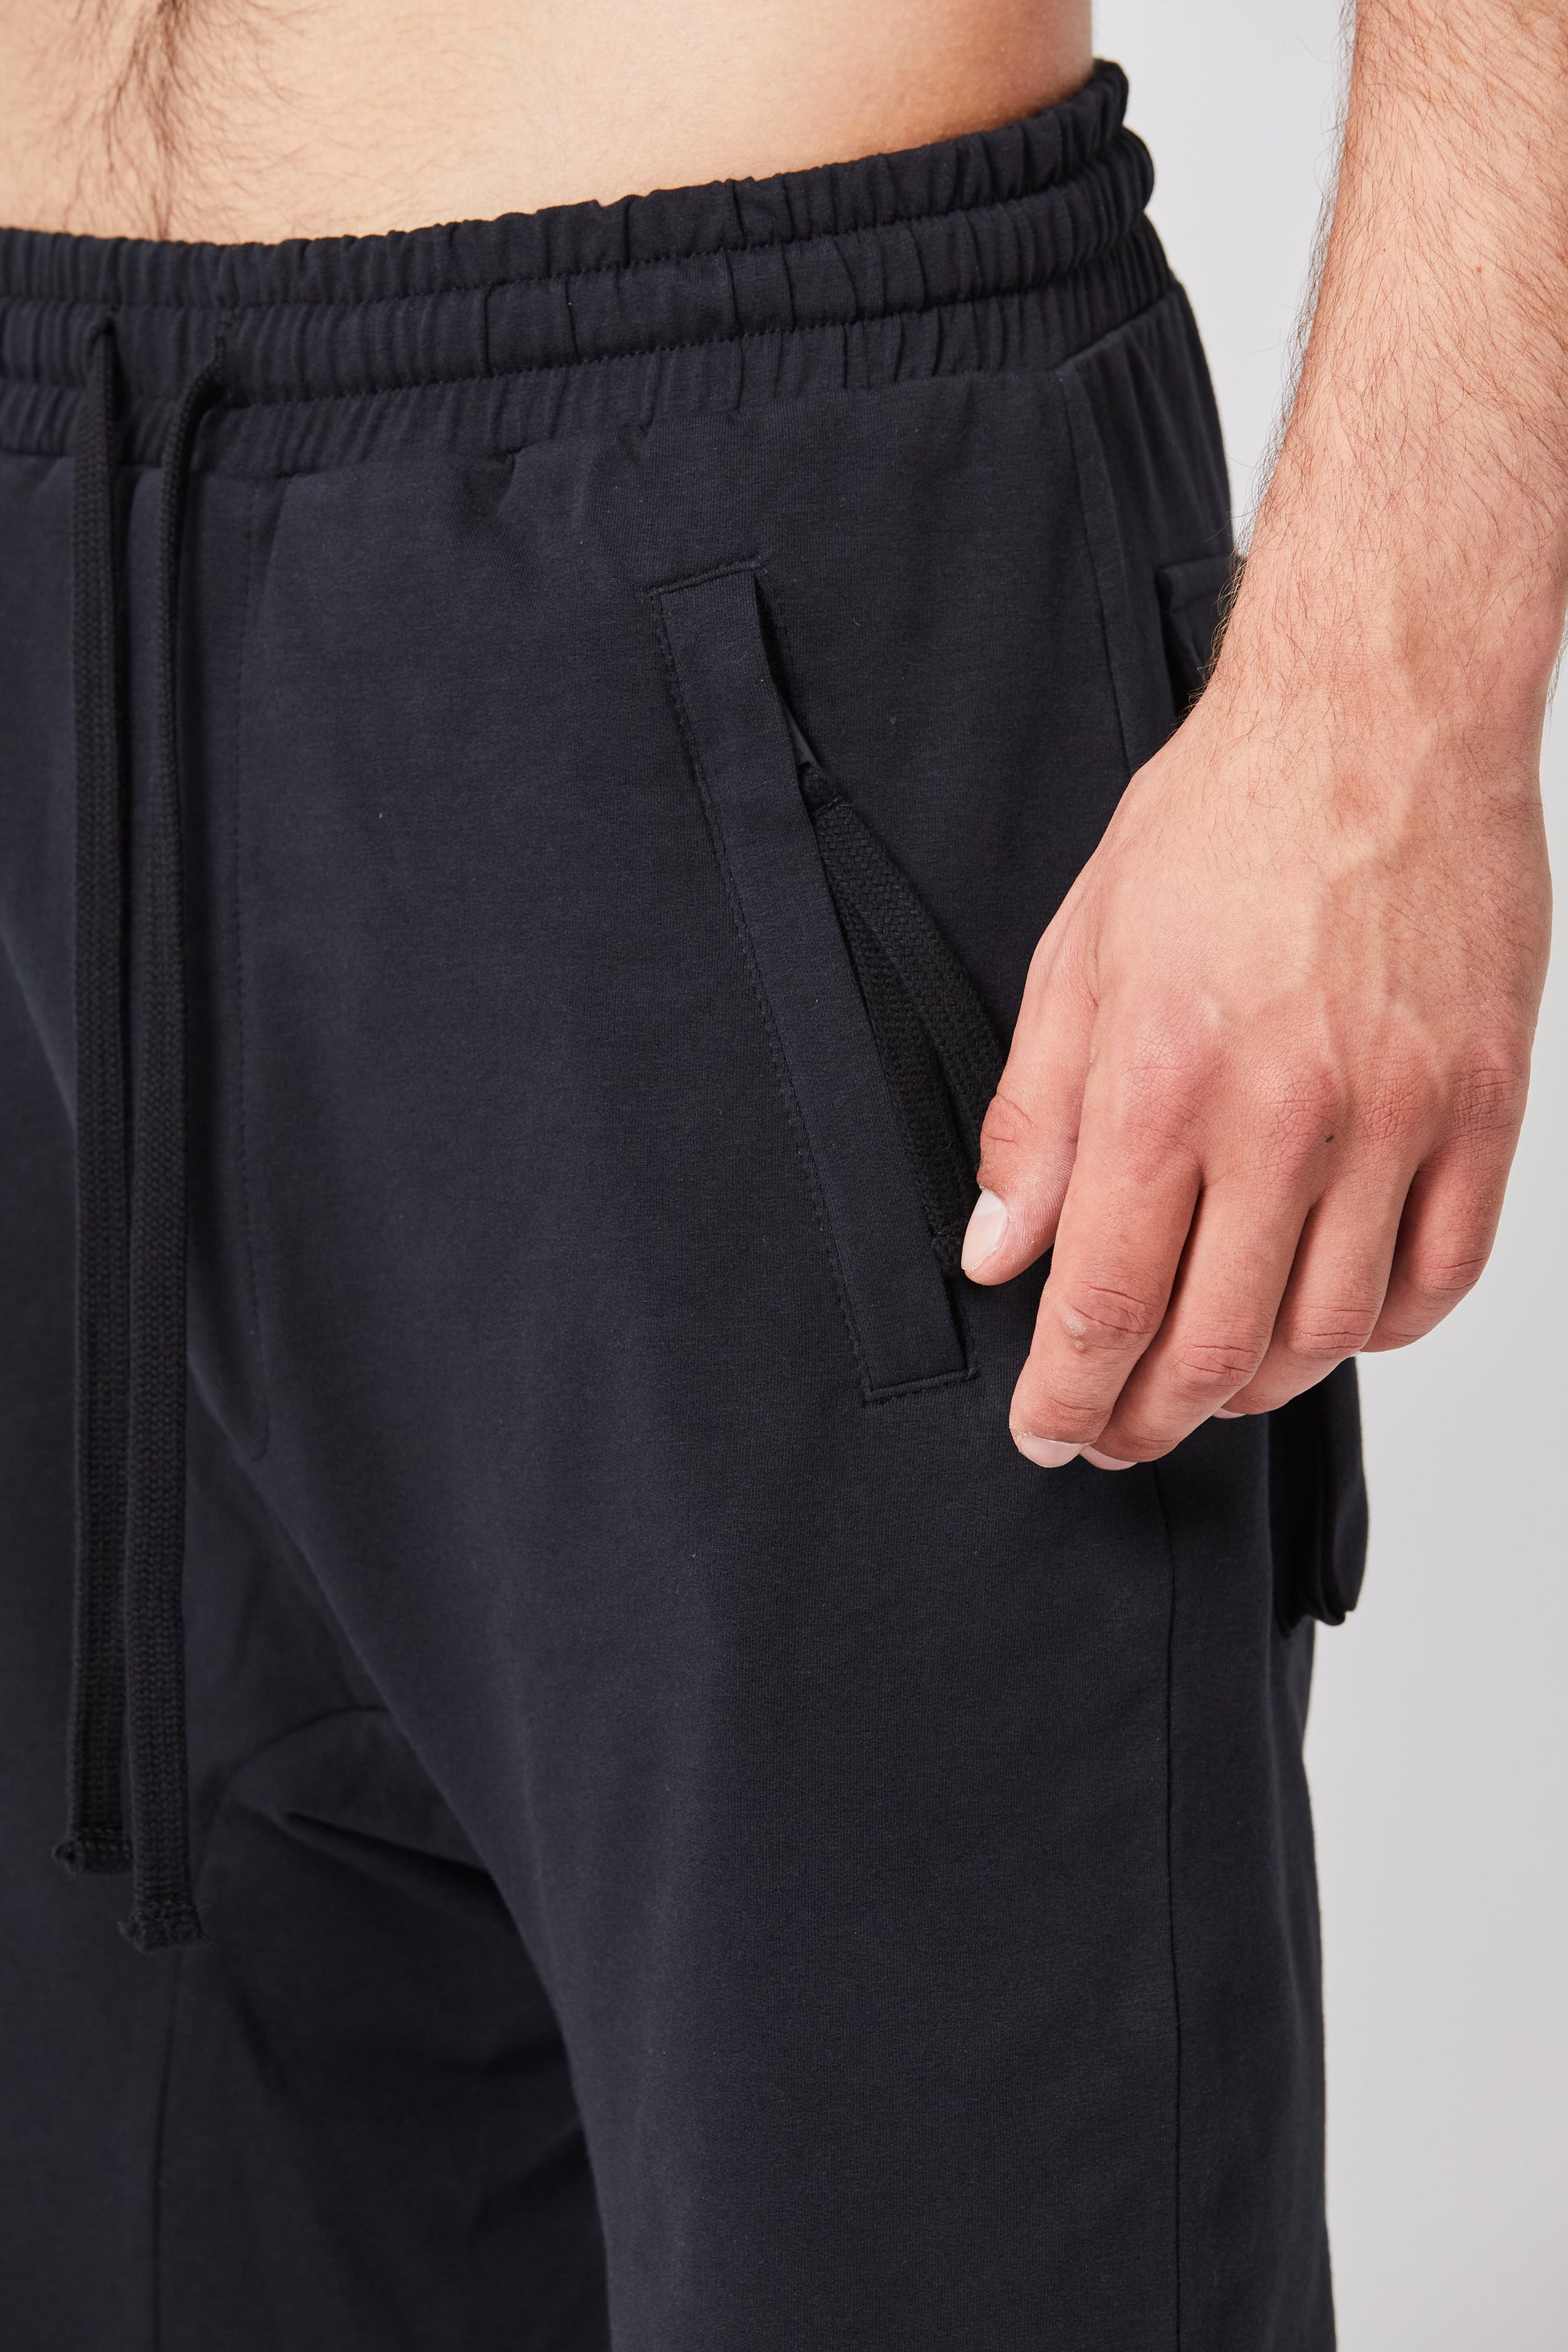 Cotton MST Stretch 379 Shorts Black Crotch – Drop The Modal Archive